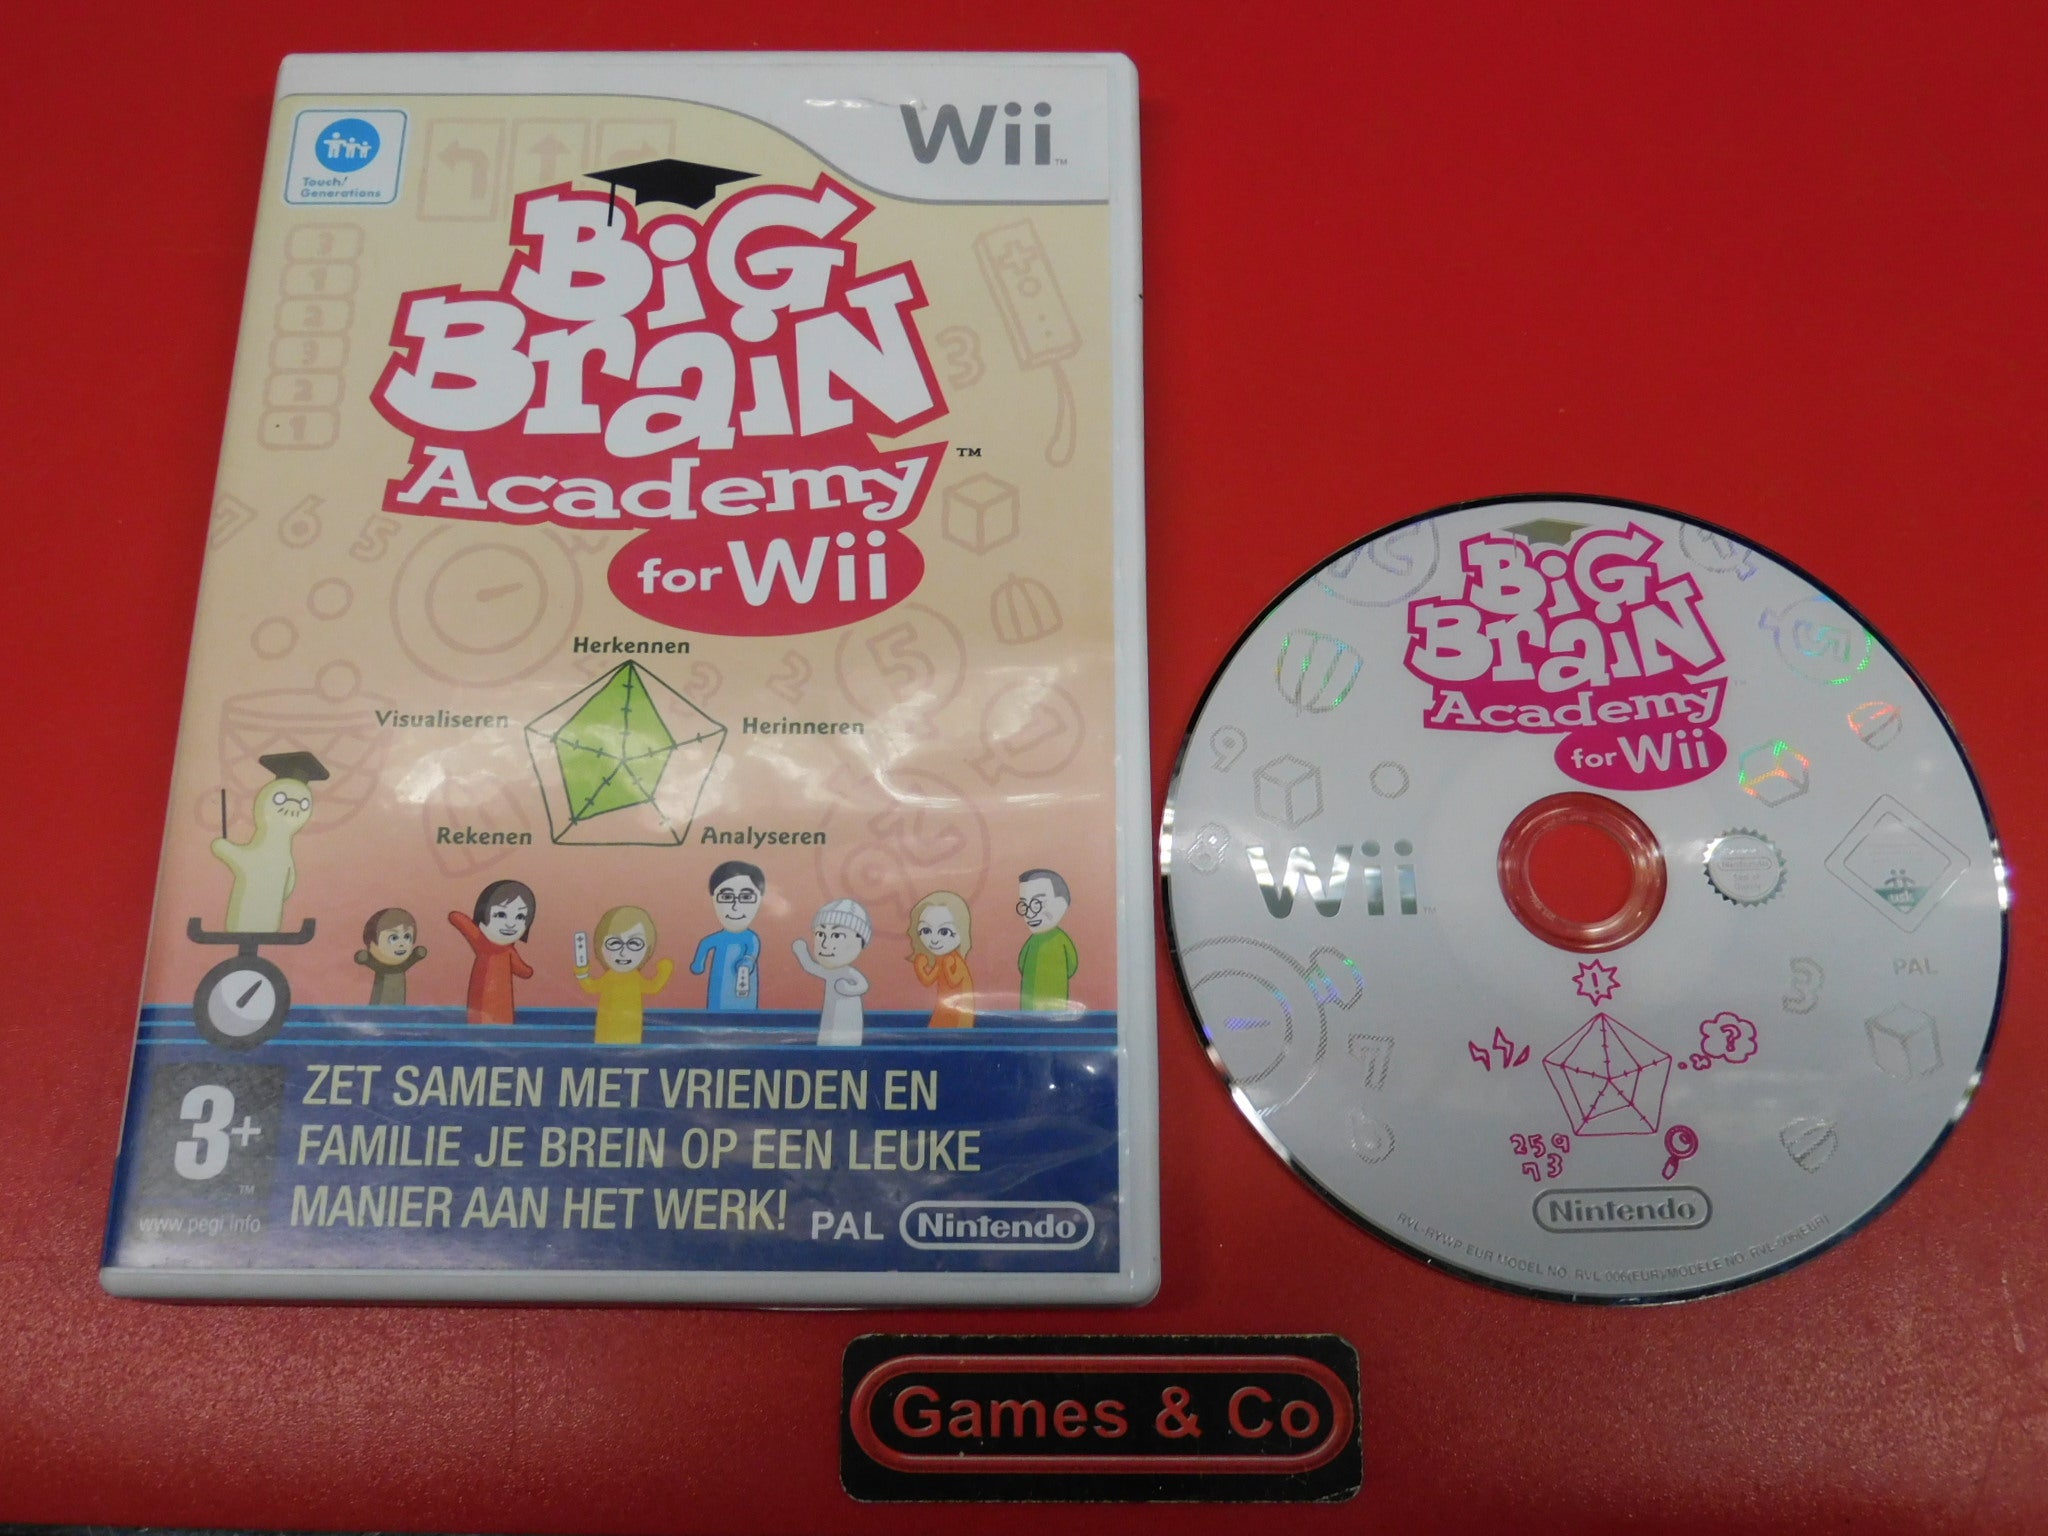 BIG BRAIN ACADEMY FOR Wii